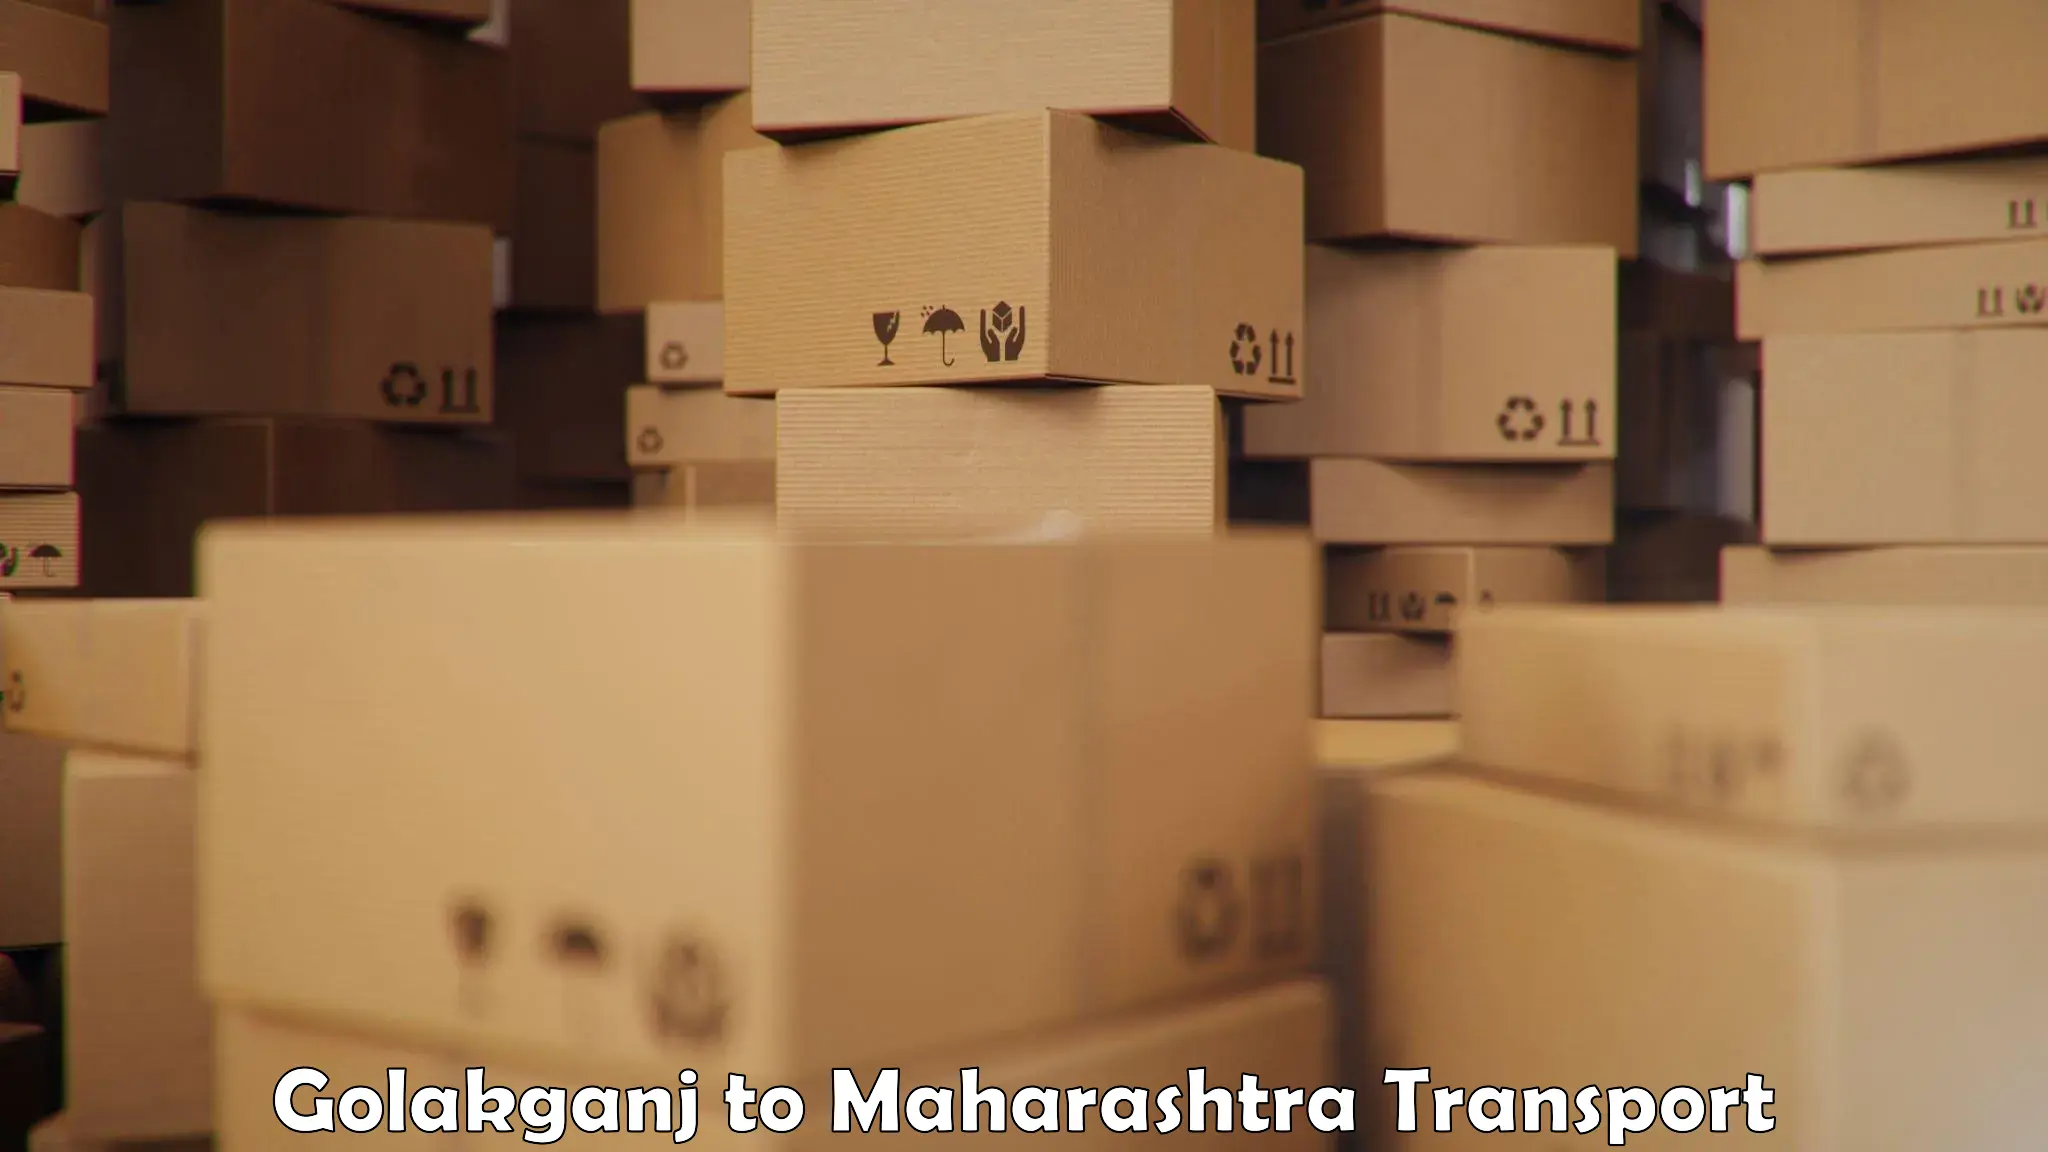 Truck transport companies in India Golakganj to Mahagaon